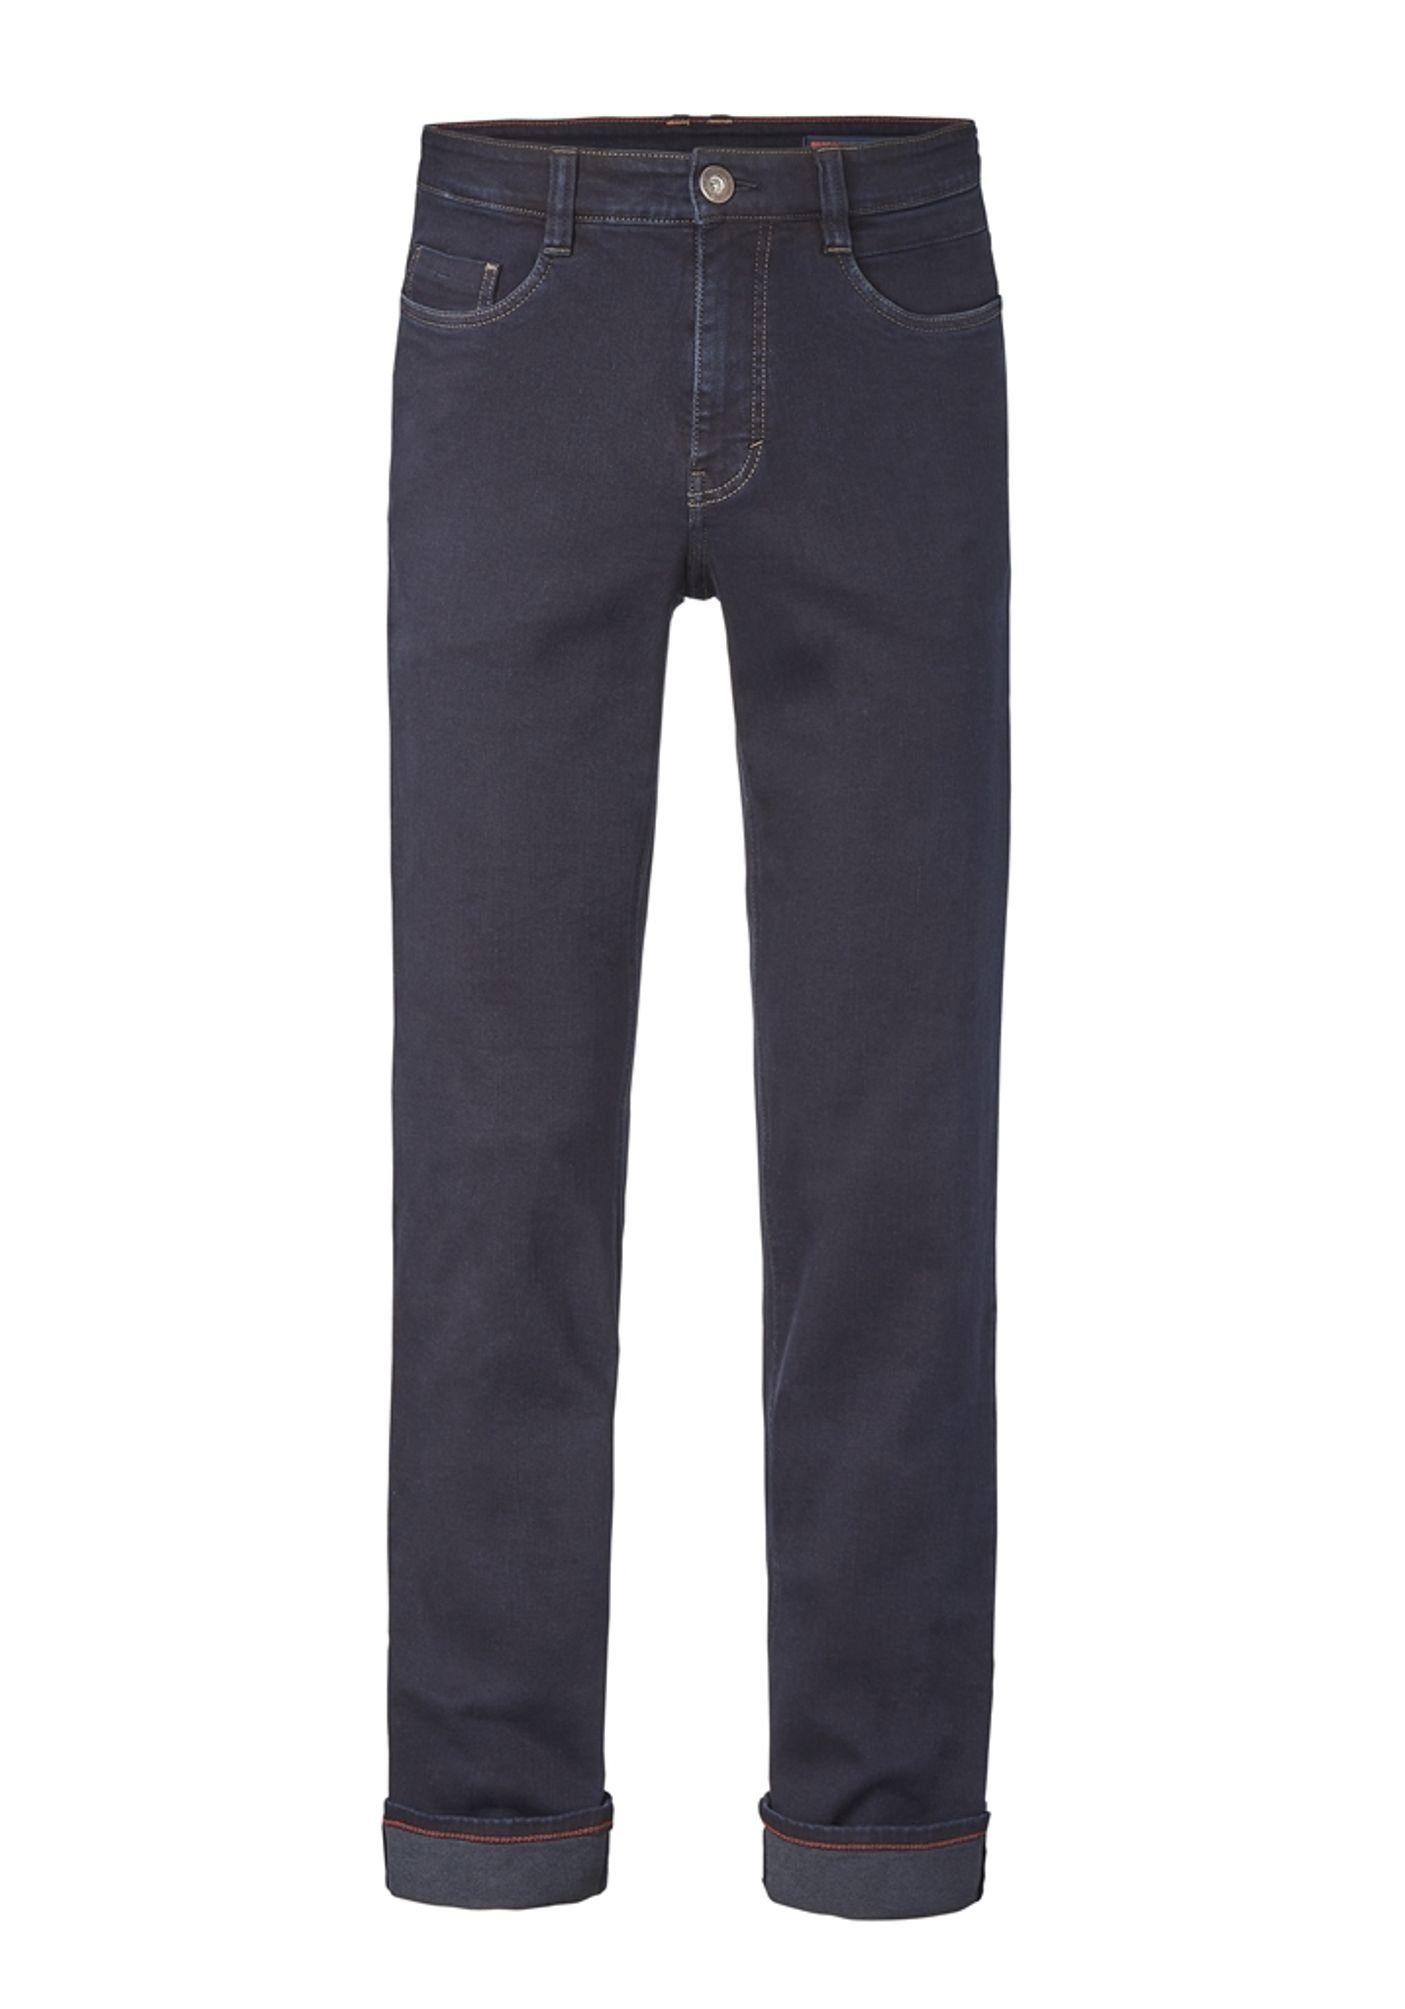 Paddock's 5-Pocket-Jeans Ranger (801412936000) Stretch blue black rinse (5702)